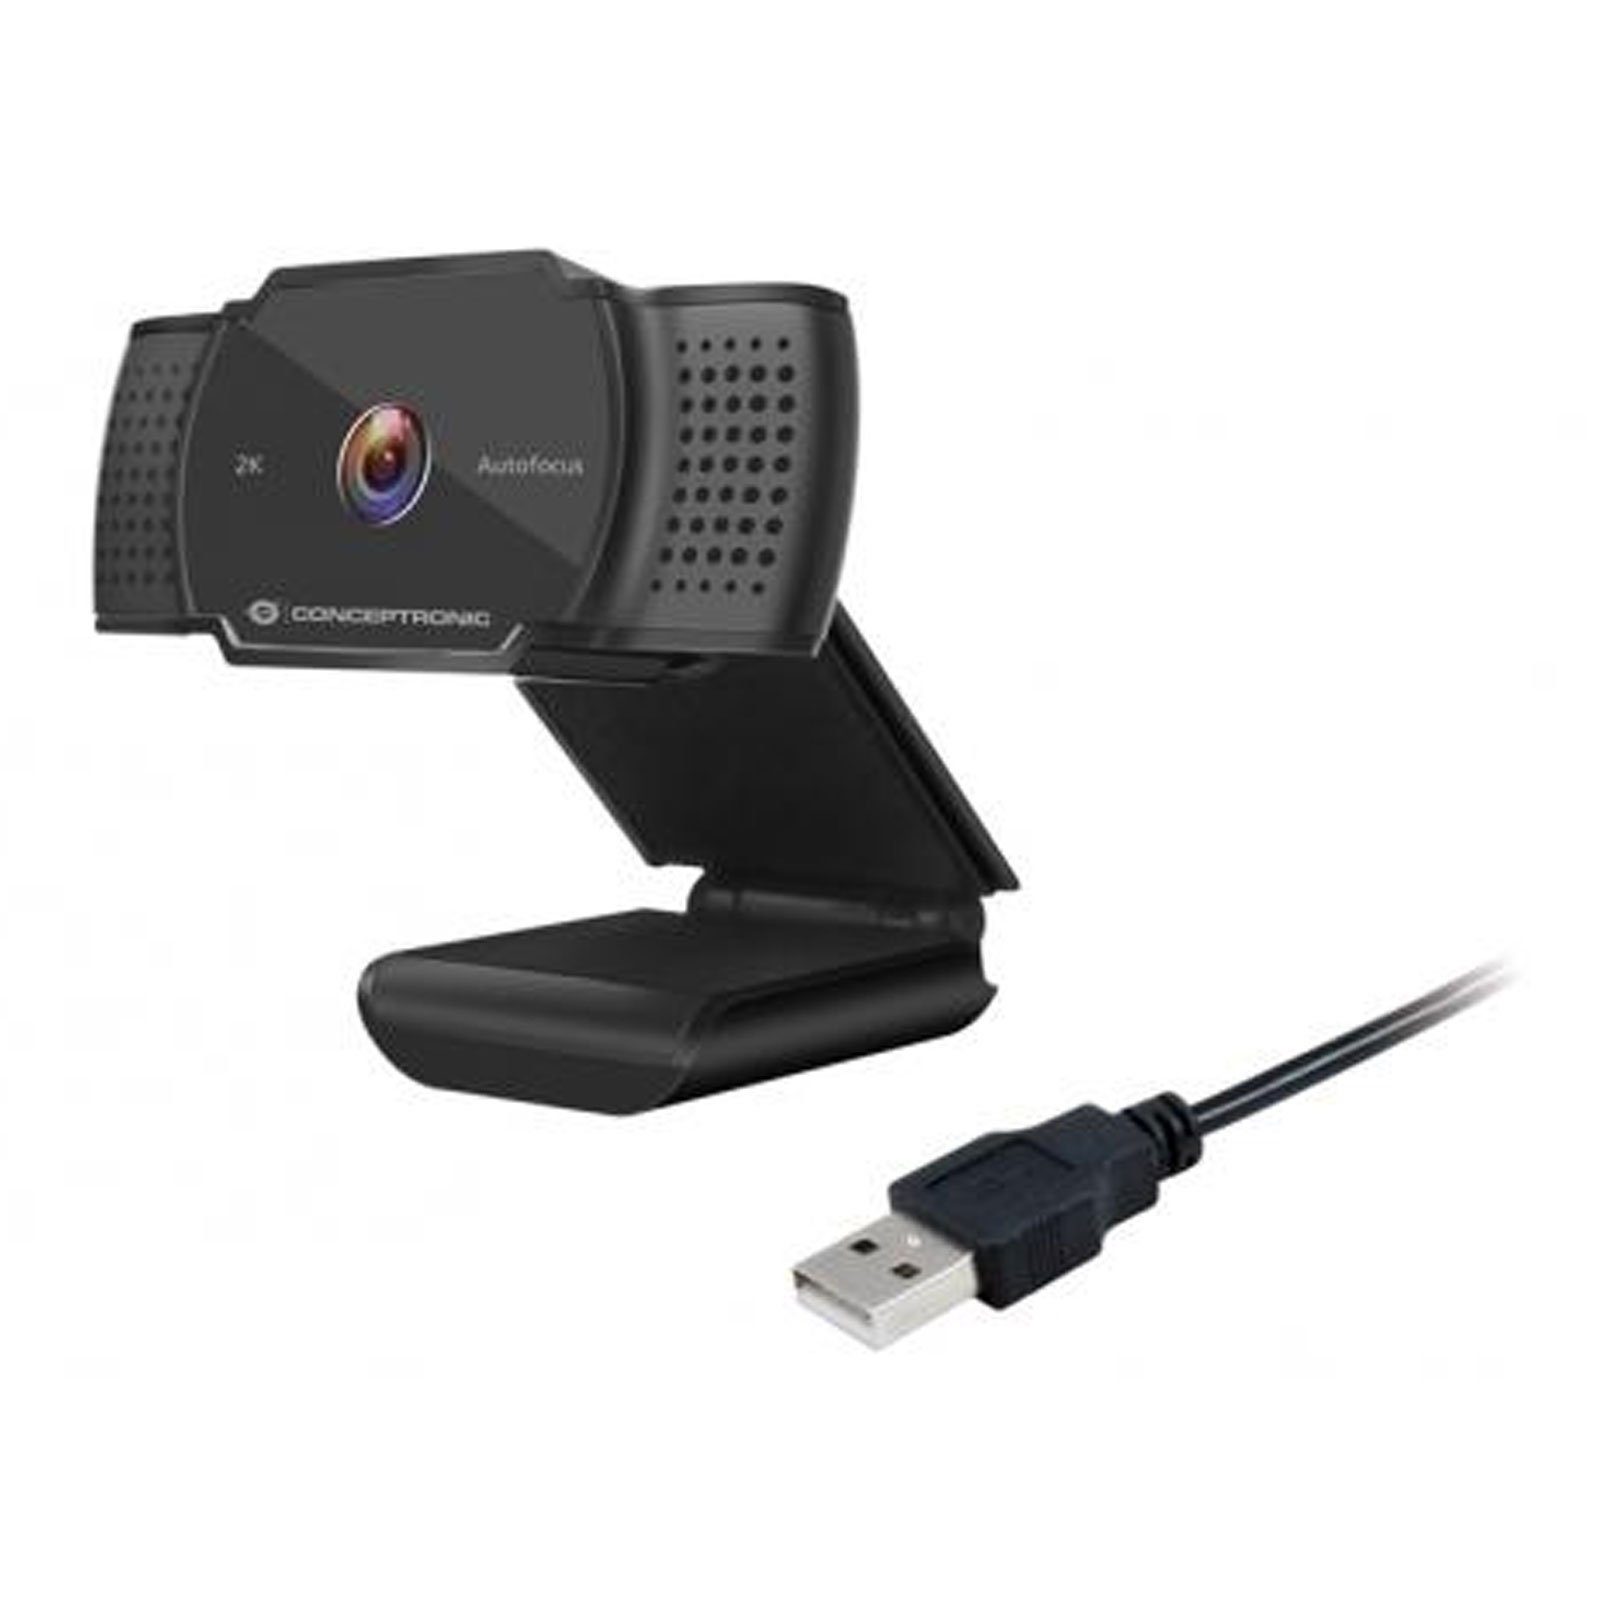 Conceptronic AMDIS 2k Super Webcam HD